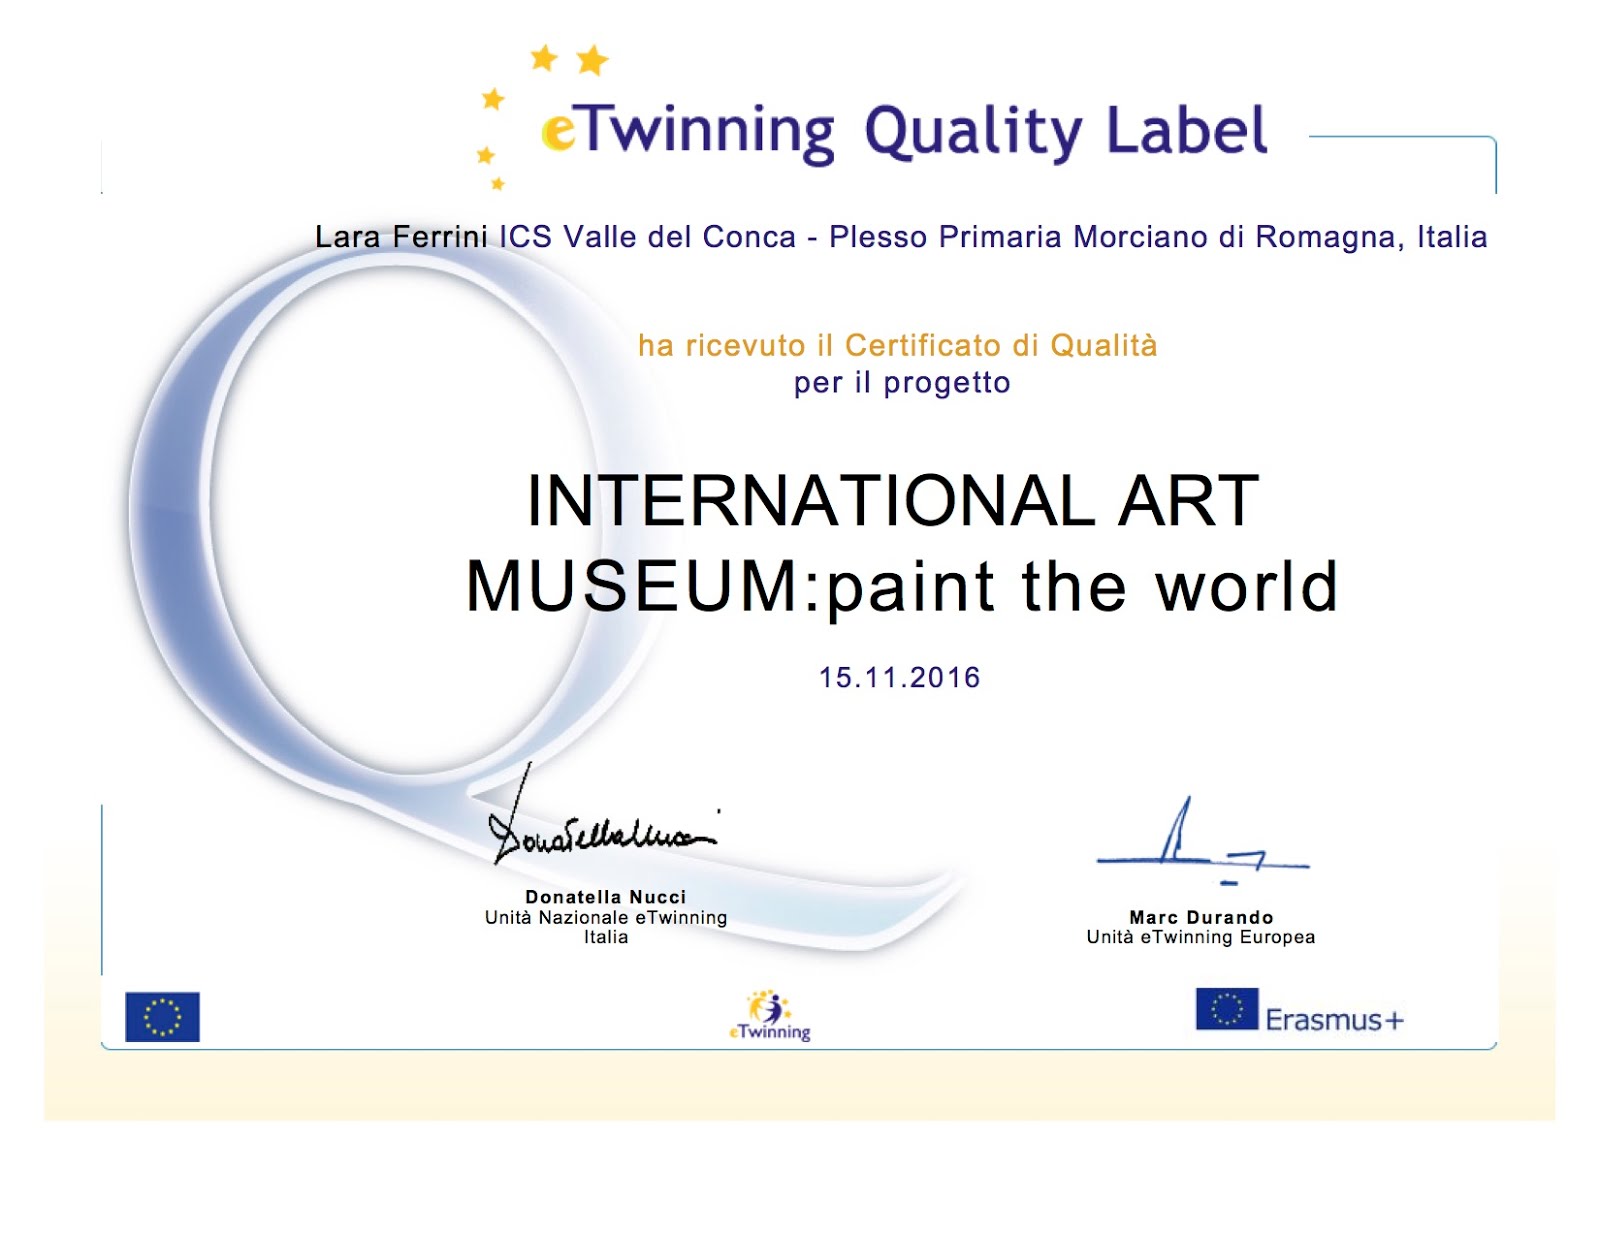 eTwinning Quality Label 2